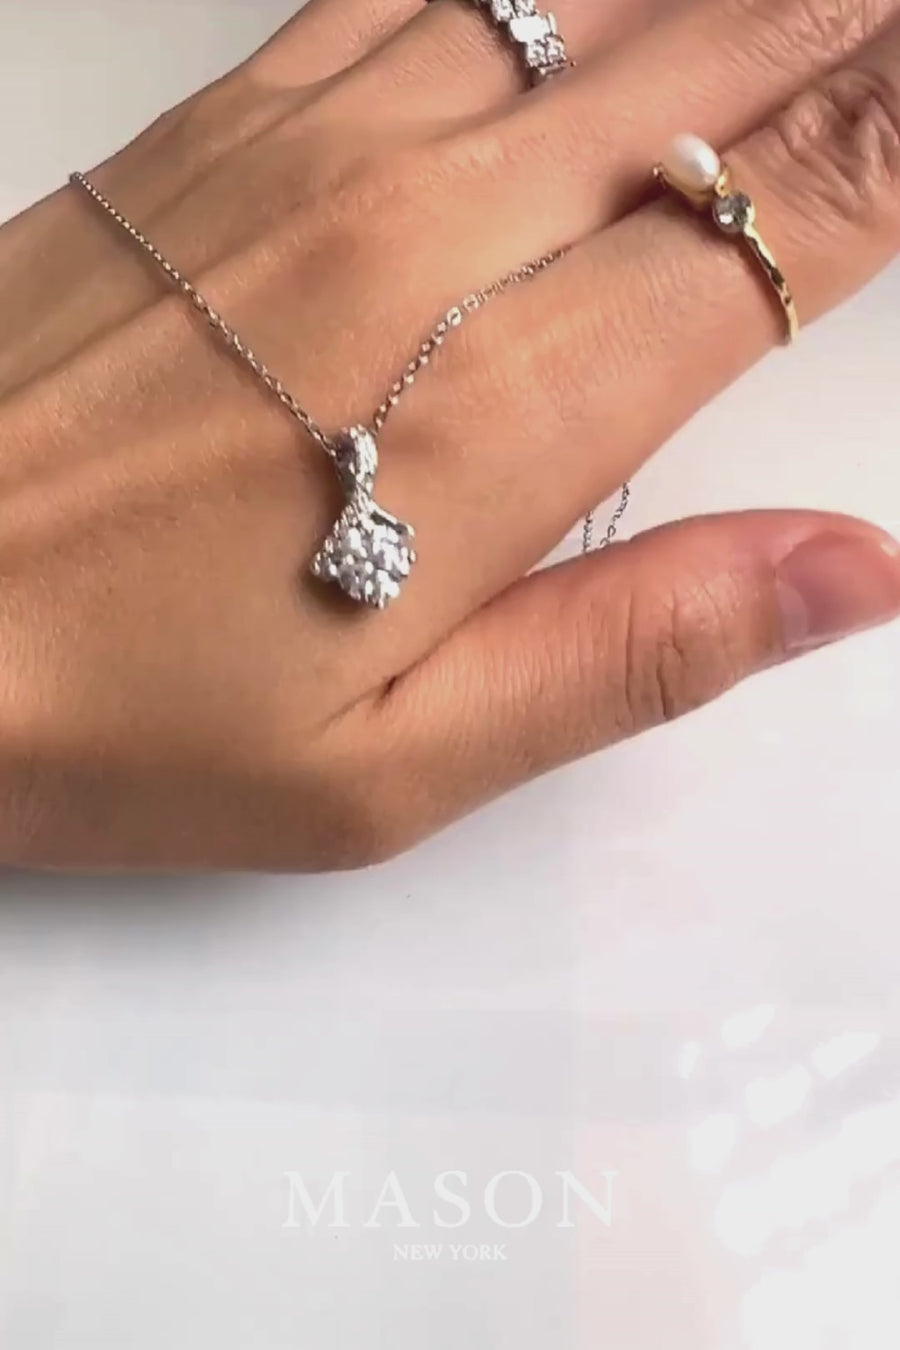 1 Carat Diamond Pendant Necklace - Unique and Chic